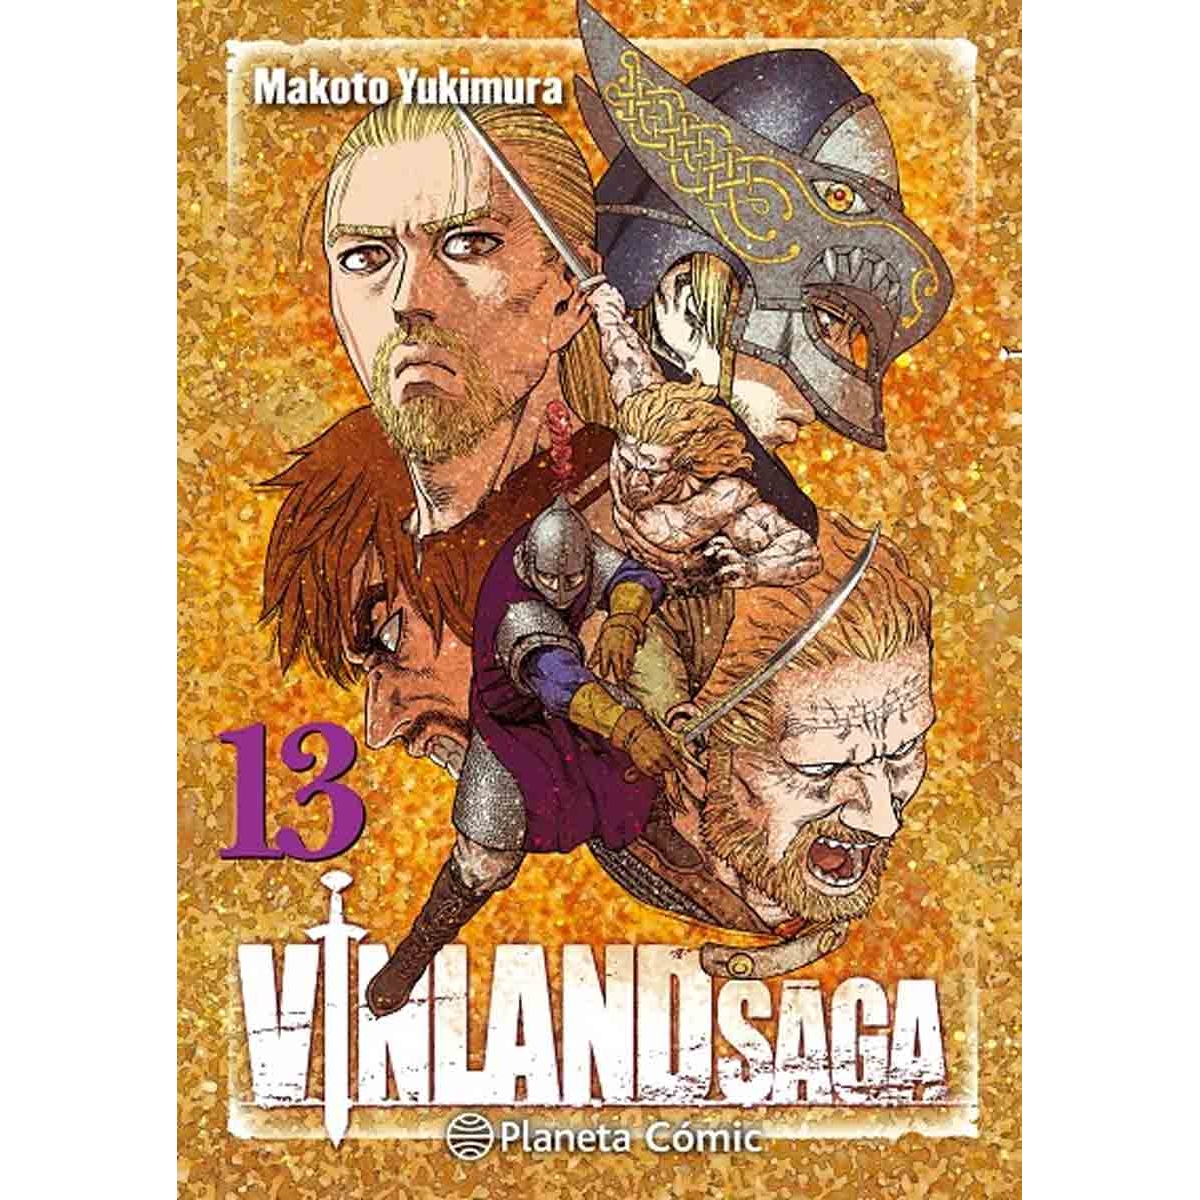 Vinland Saga 13